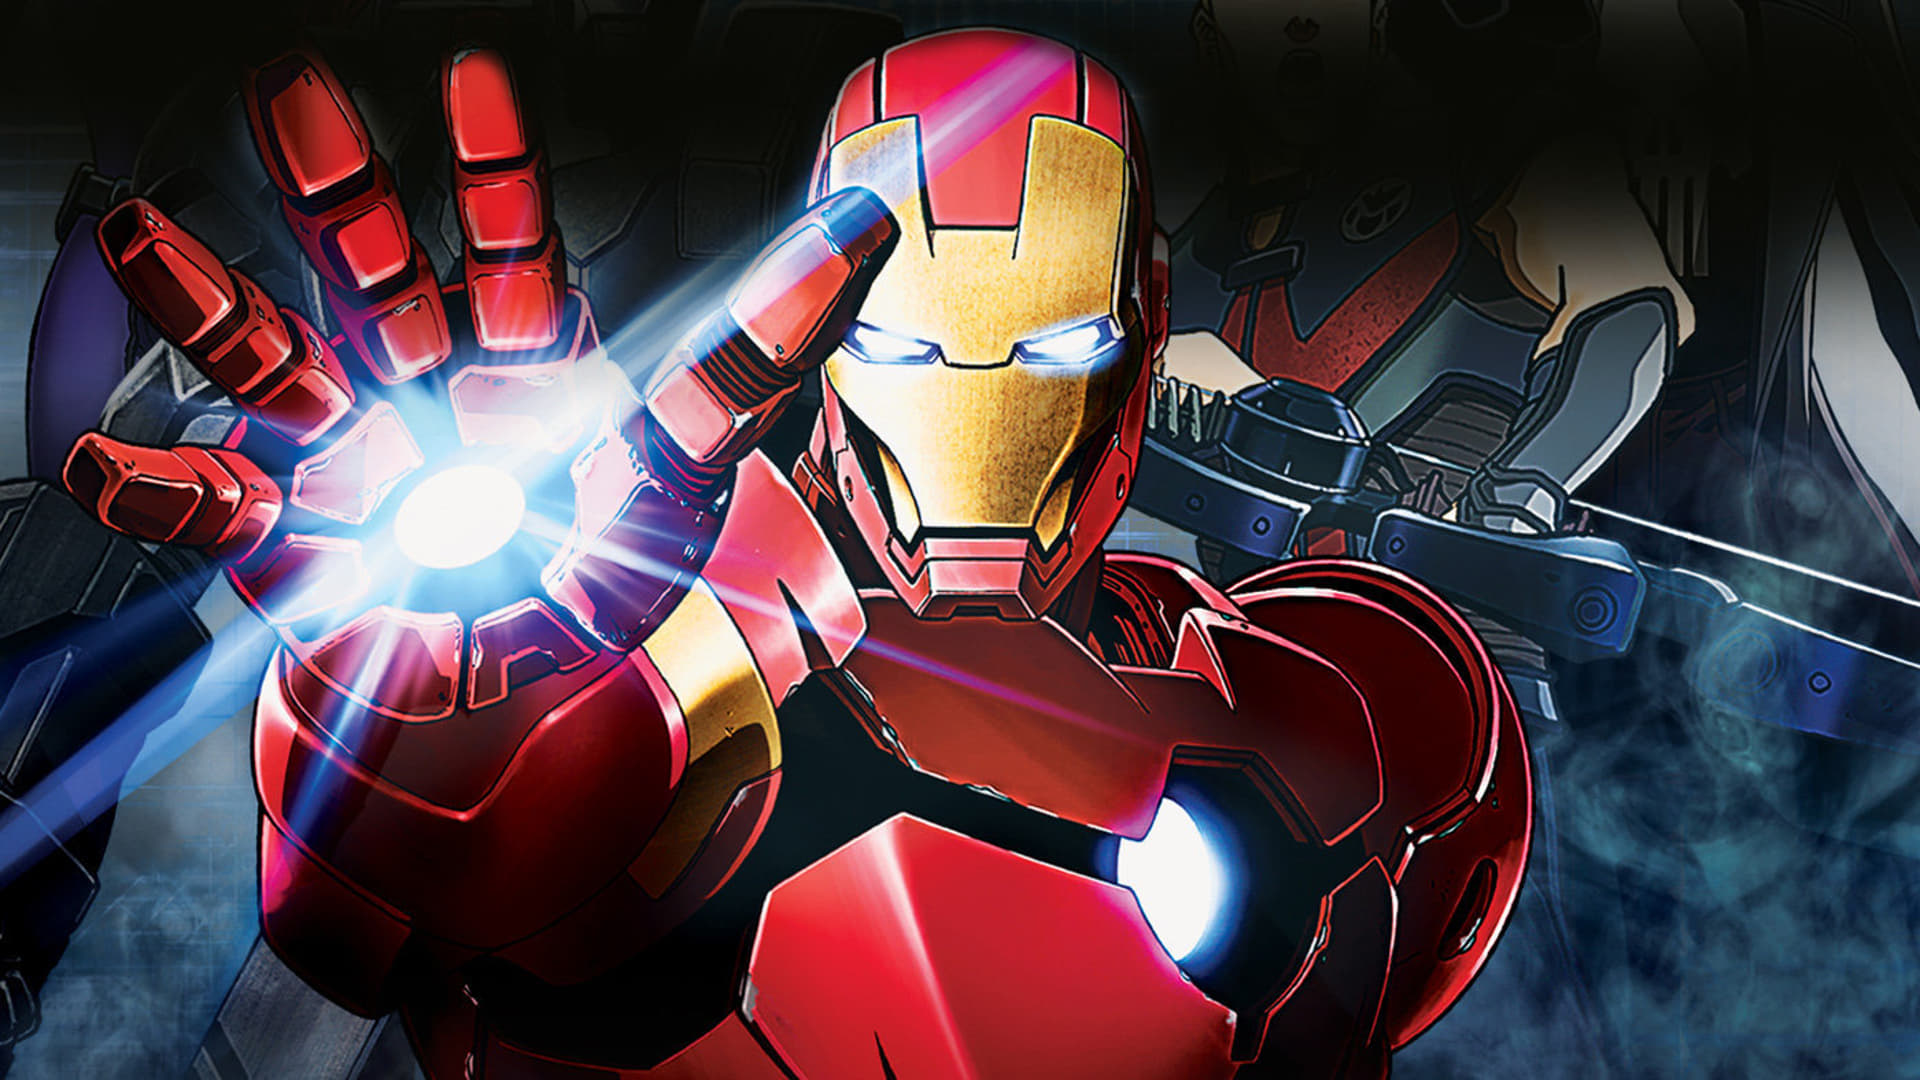 Xem Phim Người Sắt: Sự Nổi Giận Của Technovore (Iron Man: Rise of Technovore)